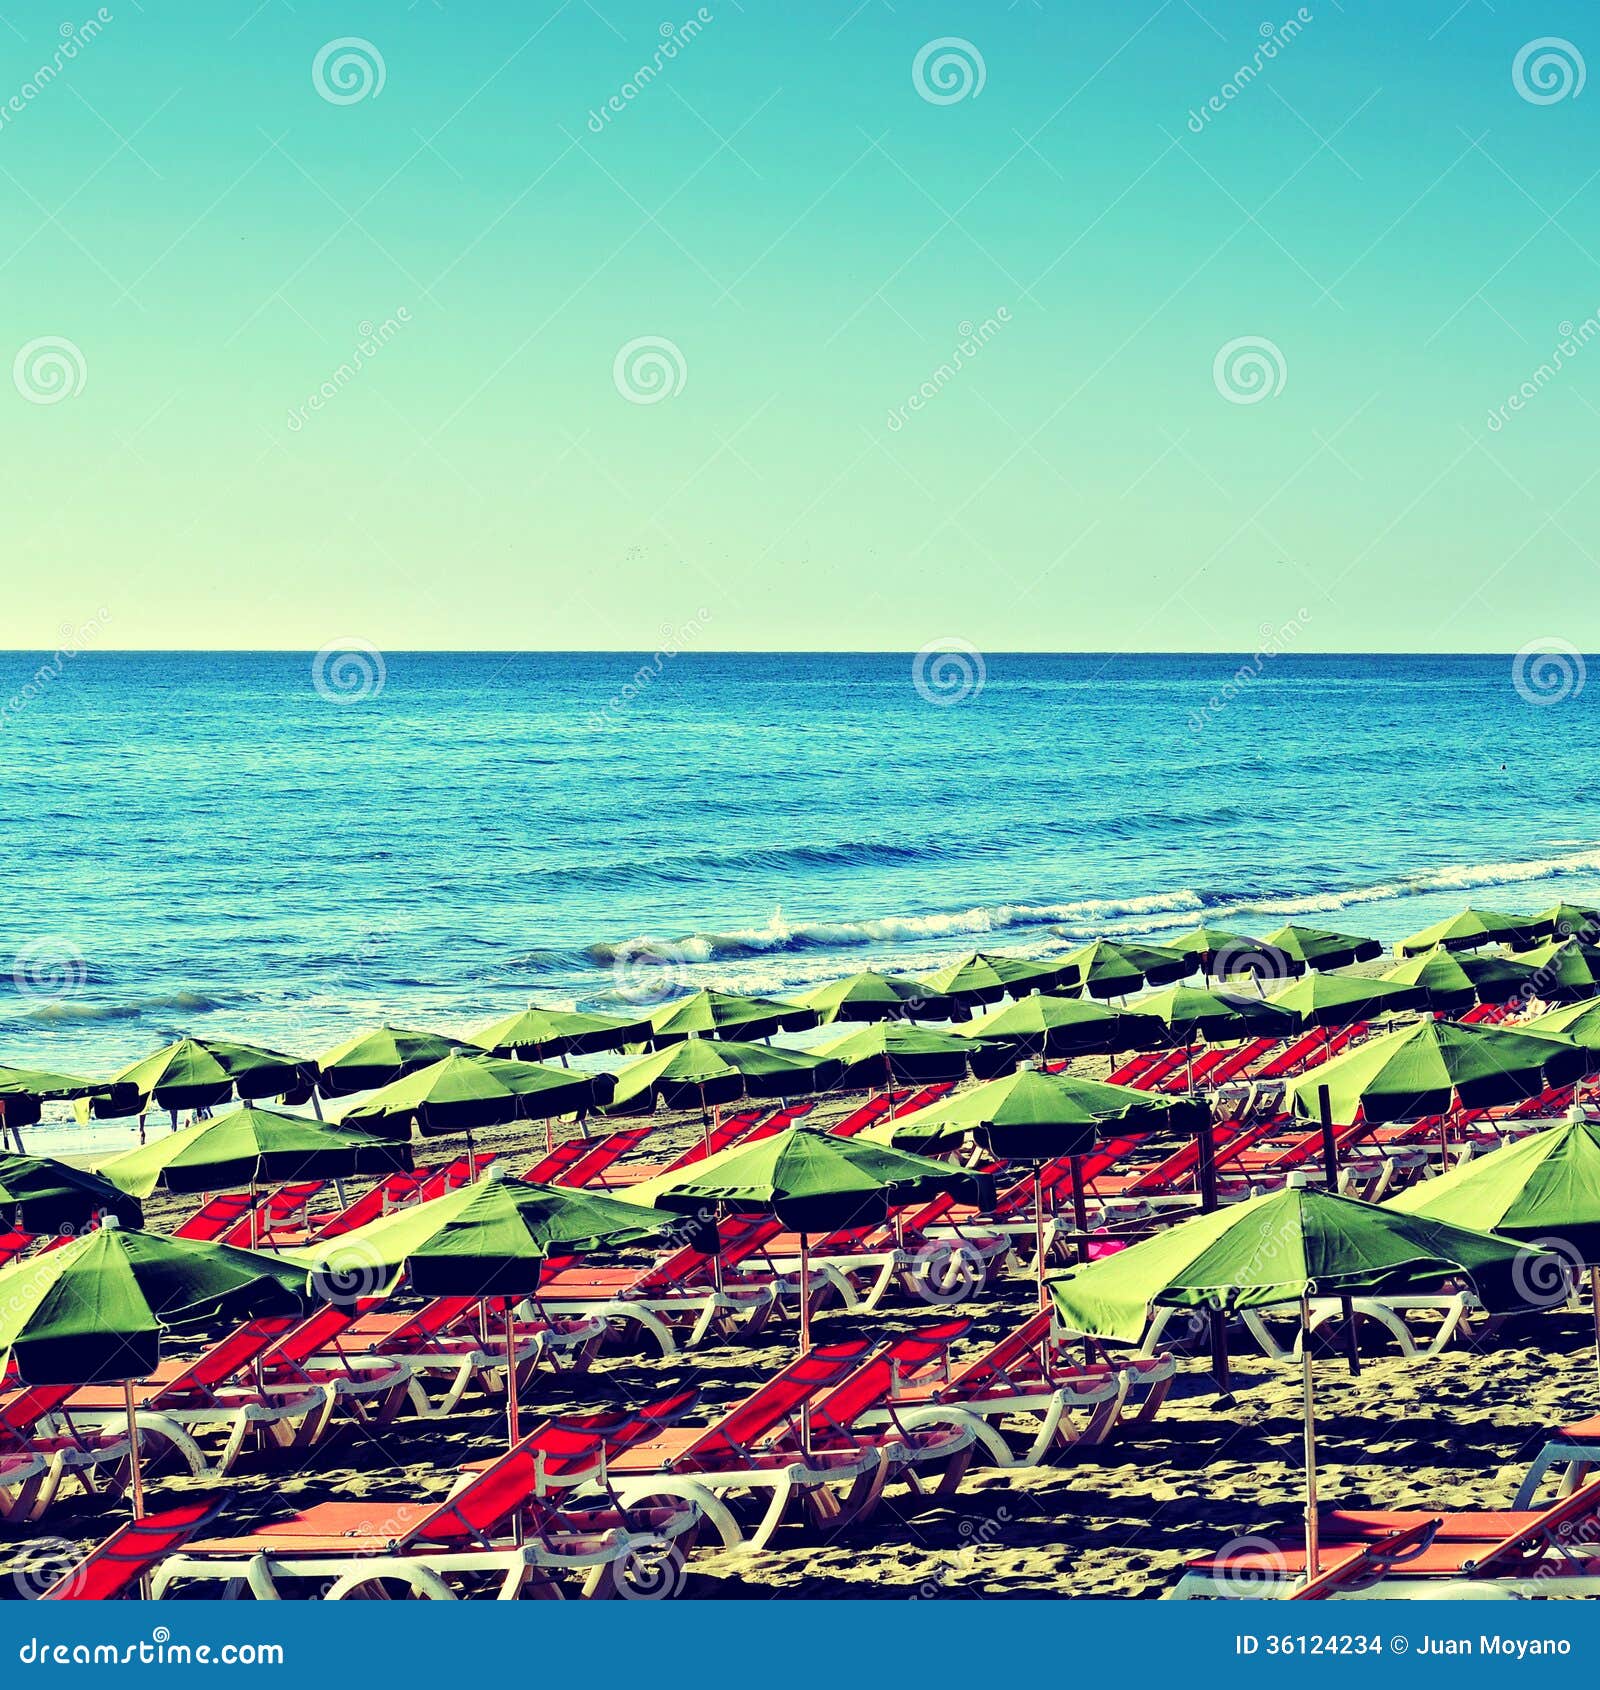 playa del ingles beach in maspalomas, gran canaria, spain